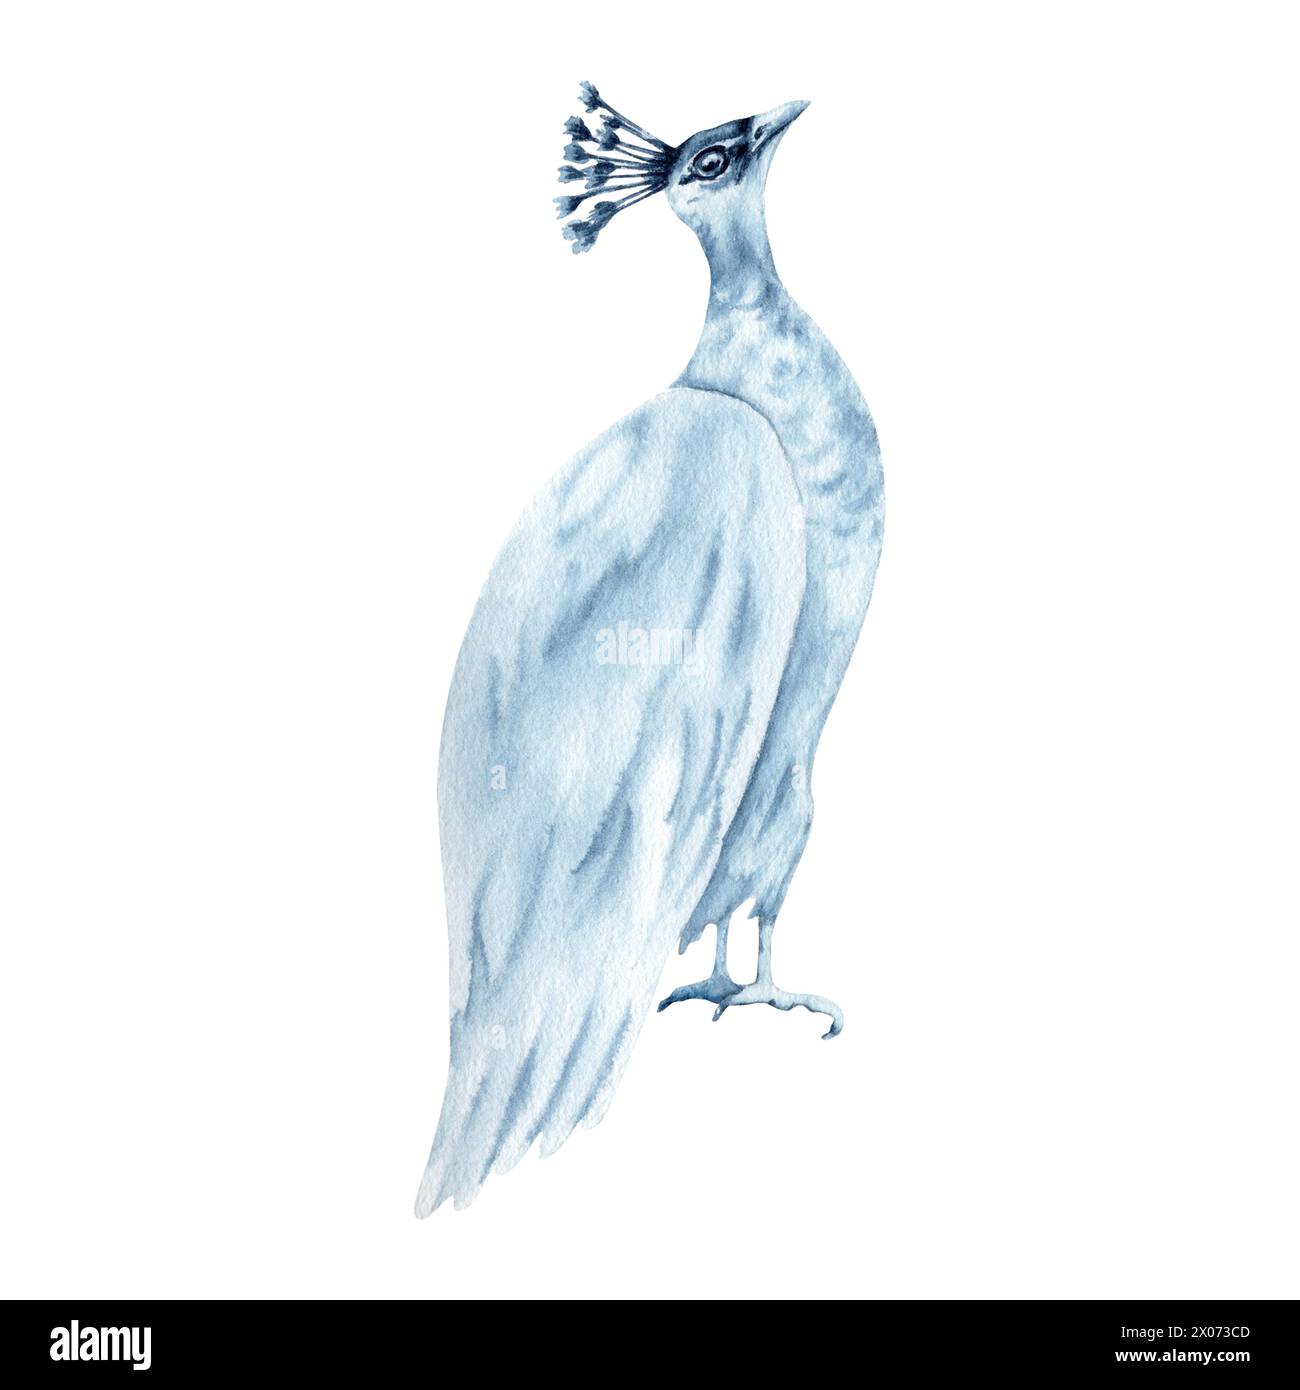 White peafowl watercolor illustration. Hand drawn bird painting isolated on white background. Indigo Blue Monochrome elegant beauty symbol for fashion Stock Photo